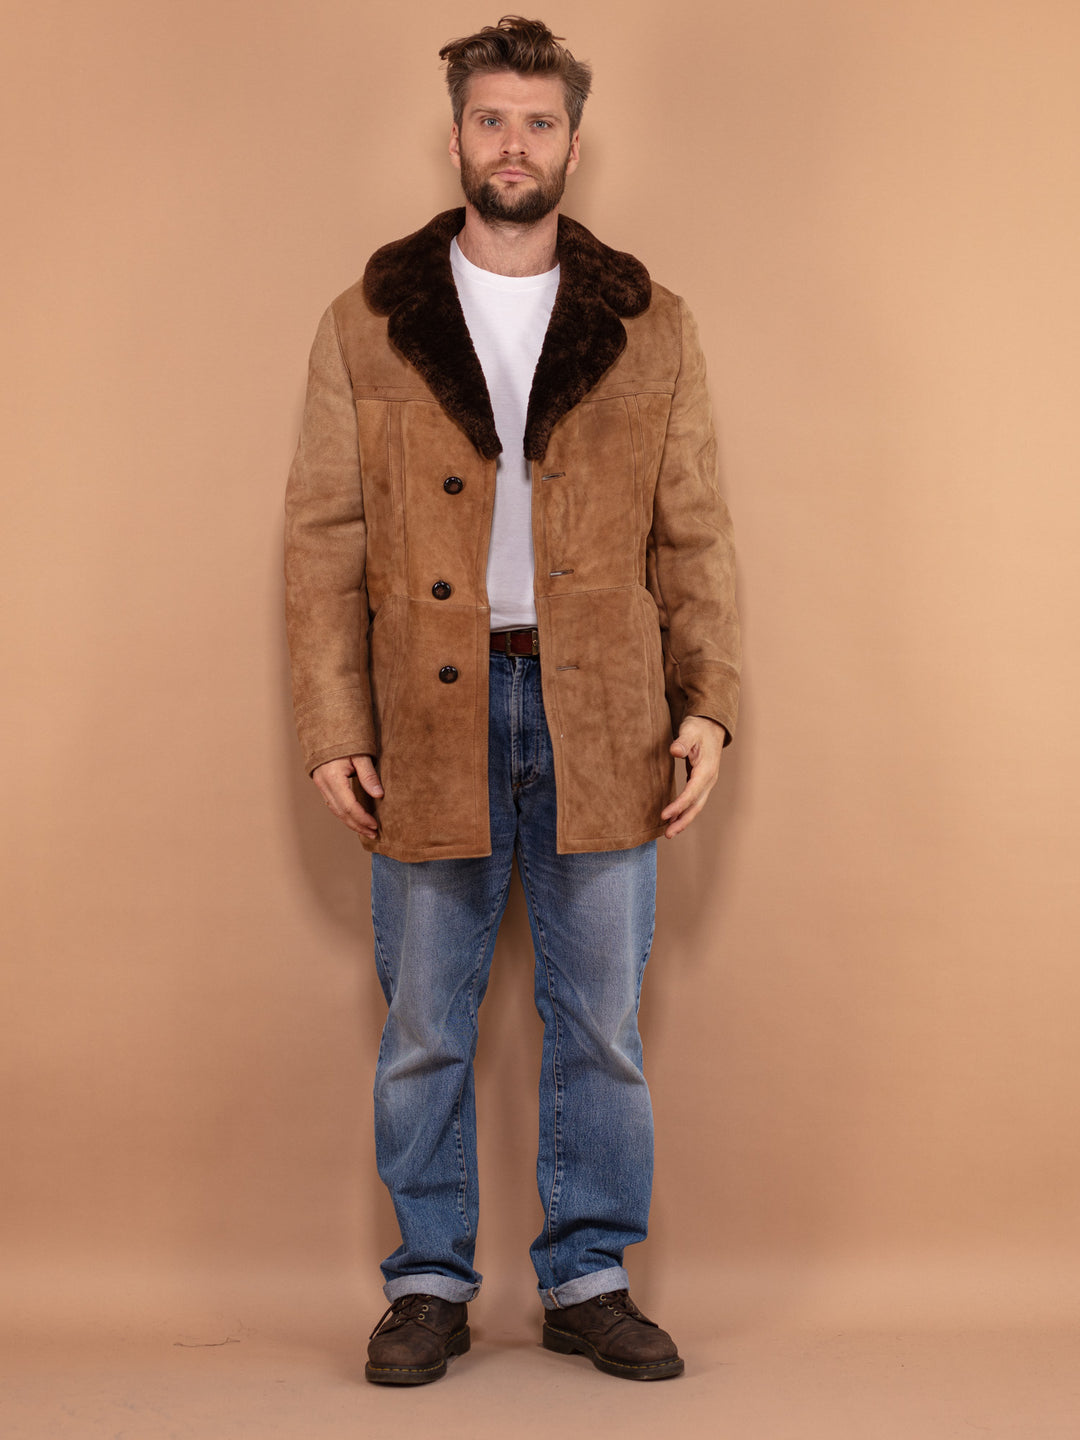 Vintage Men Shearling Coat 70s, Size Medium, Collared Winter Coat, Boho Outerwear, Warm Sheep Skin Suede Overcoat, Sustainable Fashion